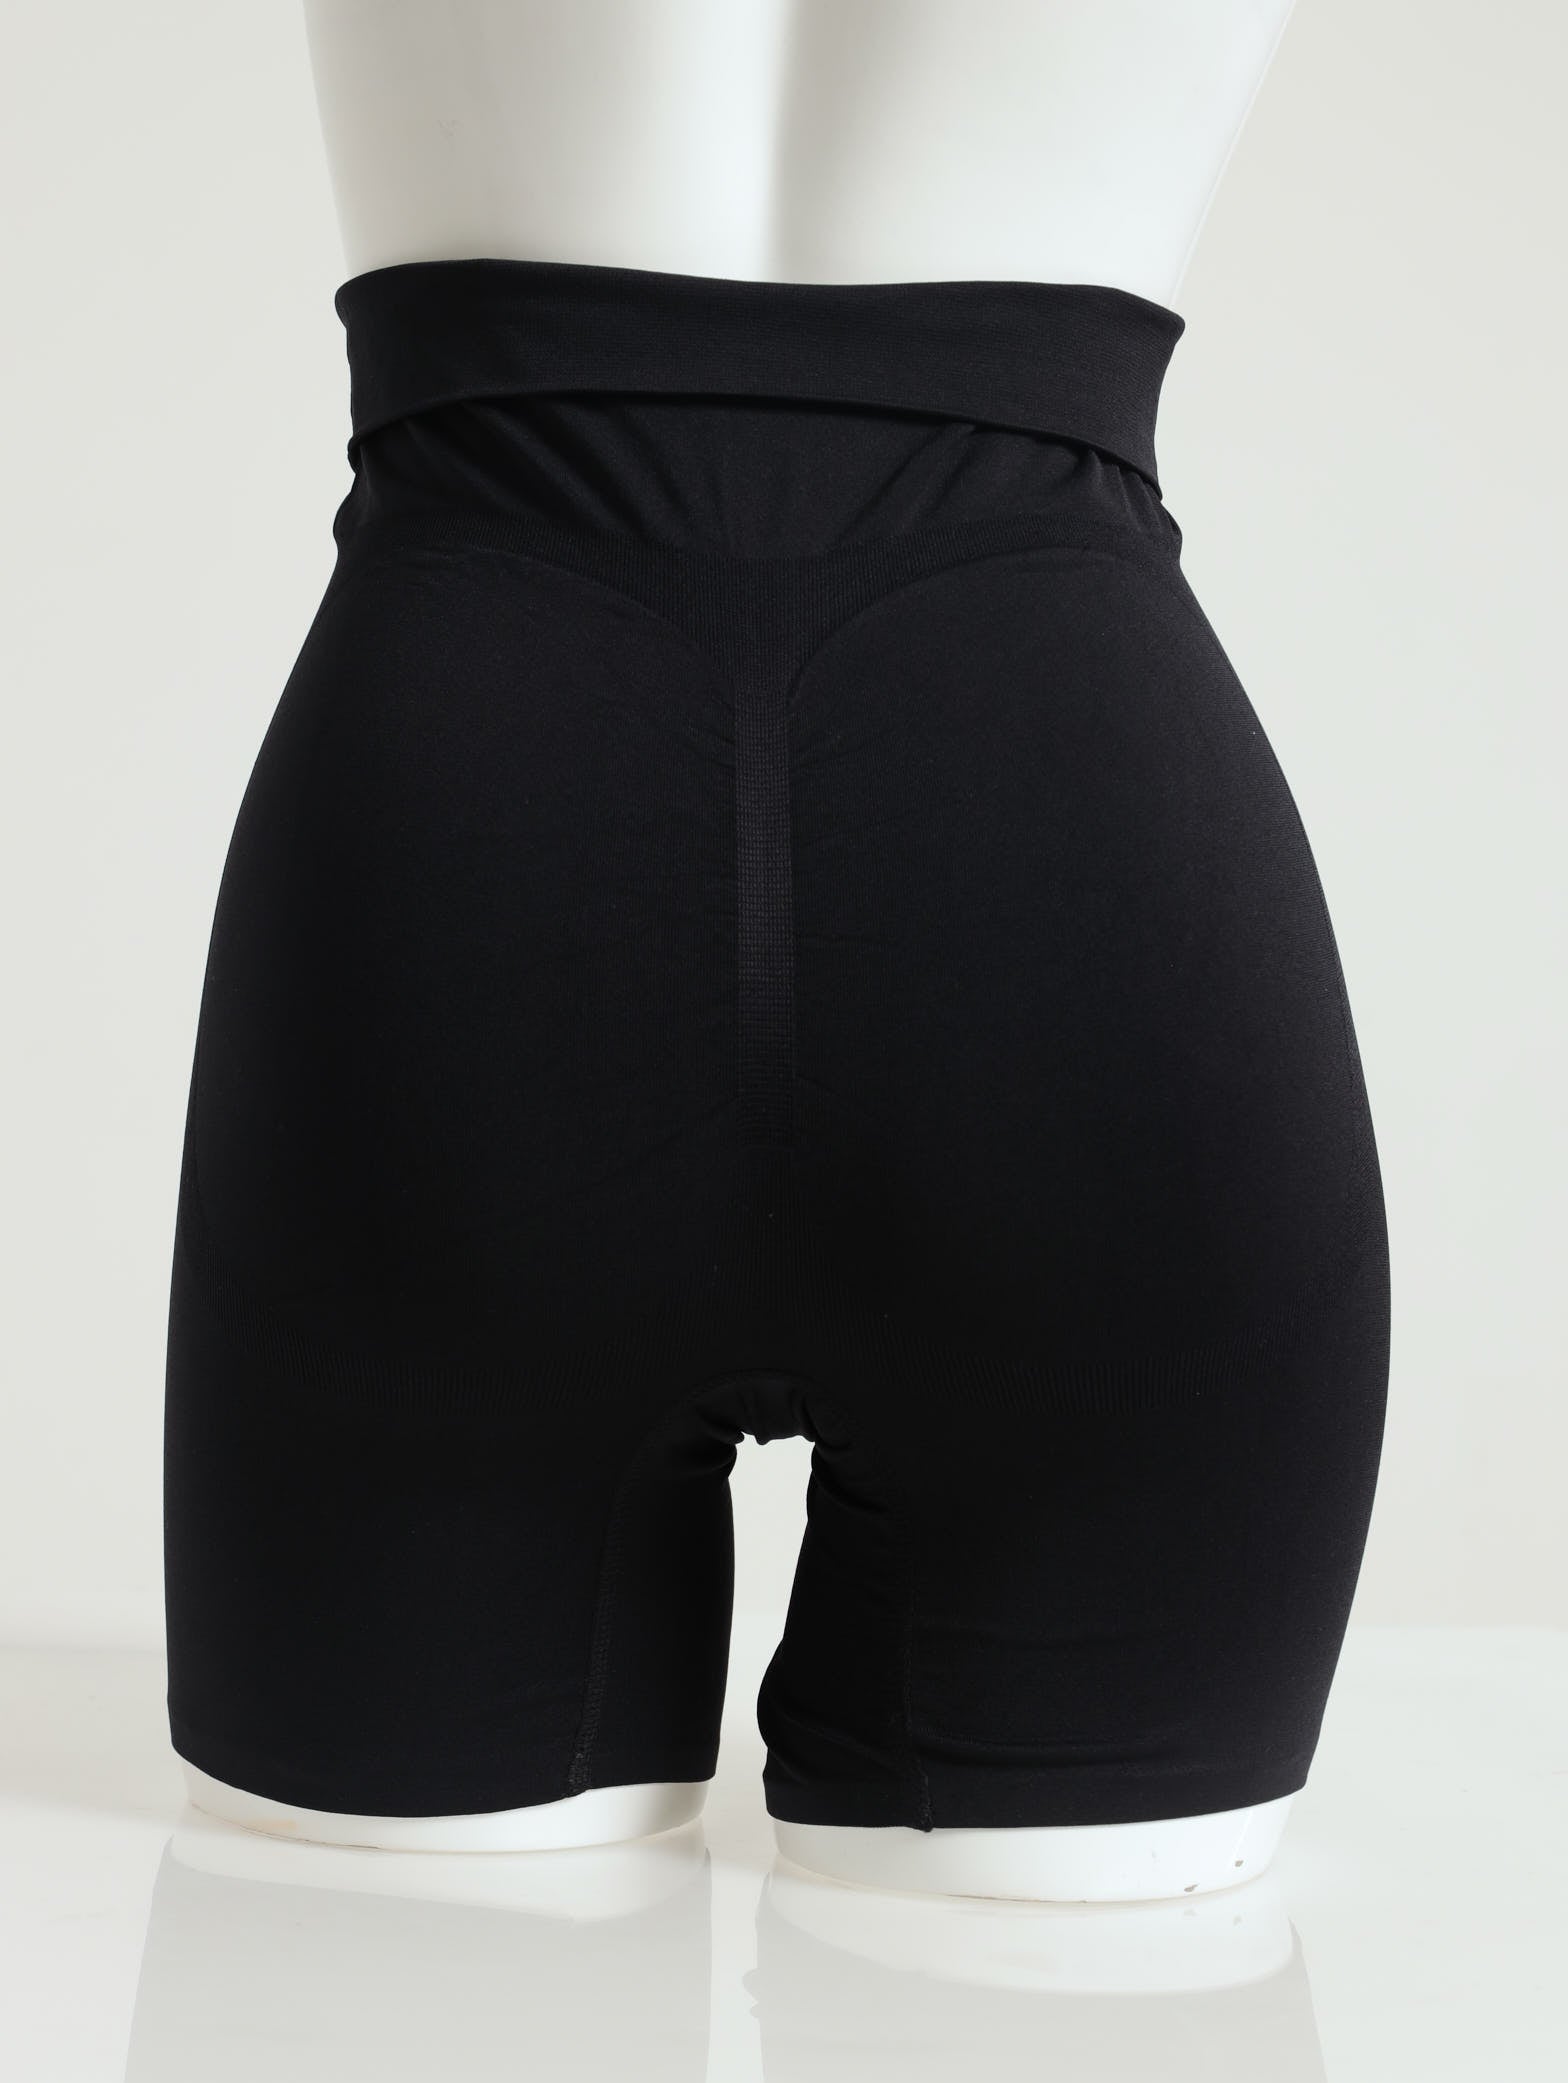 Shapewear Shorts (Medium, Black)